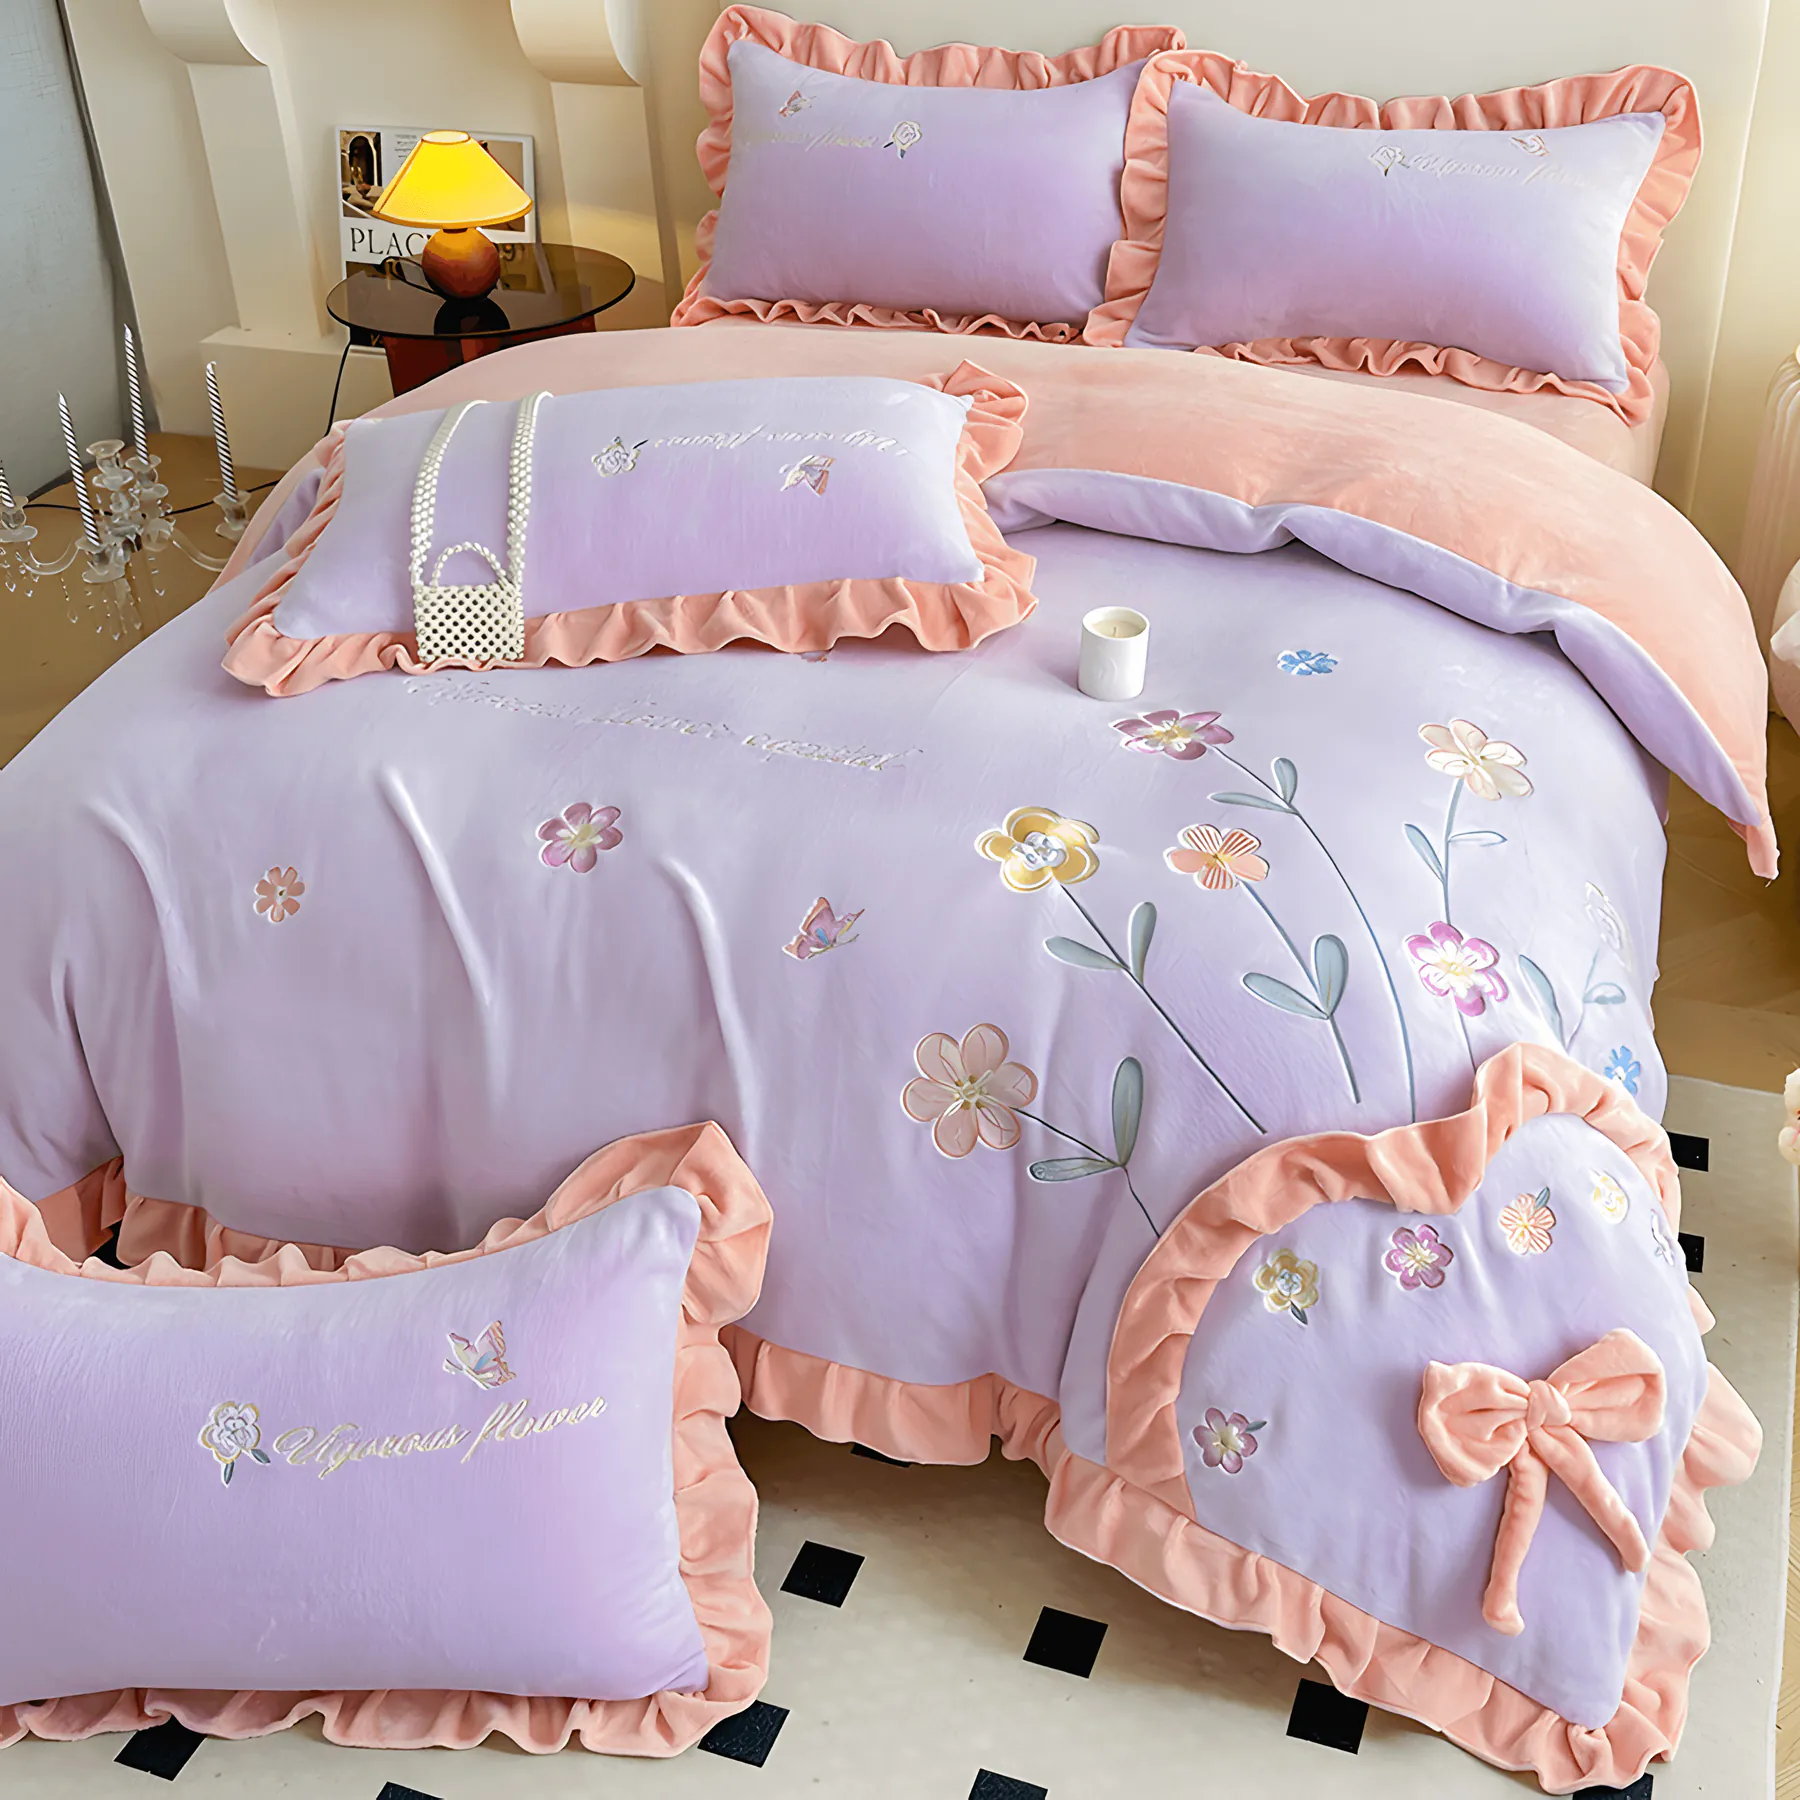 Romantic Milk Fiber Comforter Cover Bed Sheet Pillowcases 4 Pcs Set01